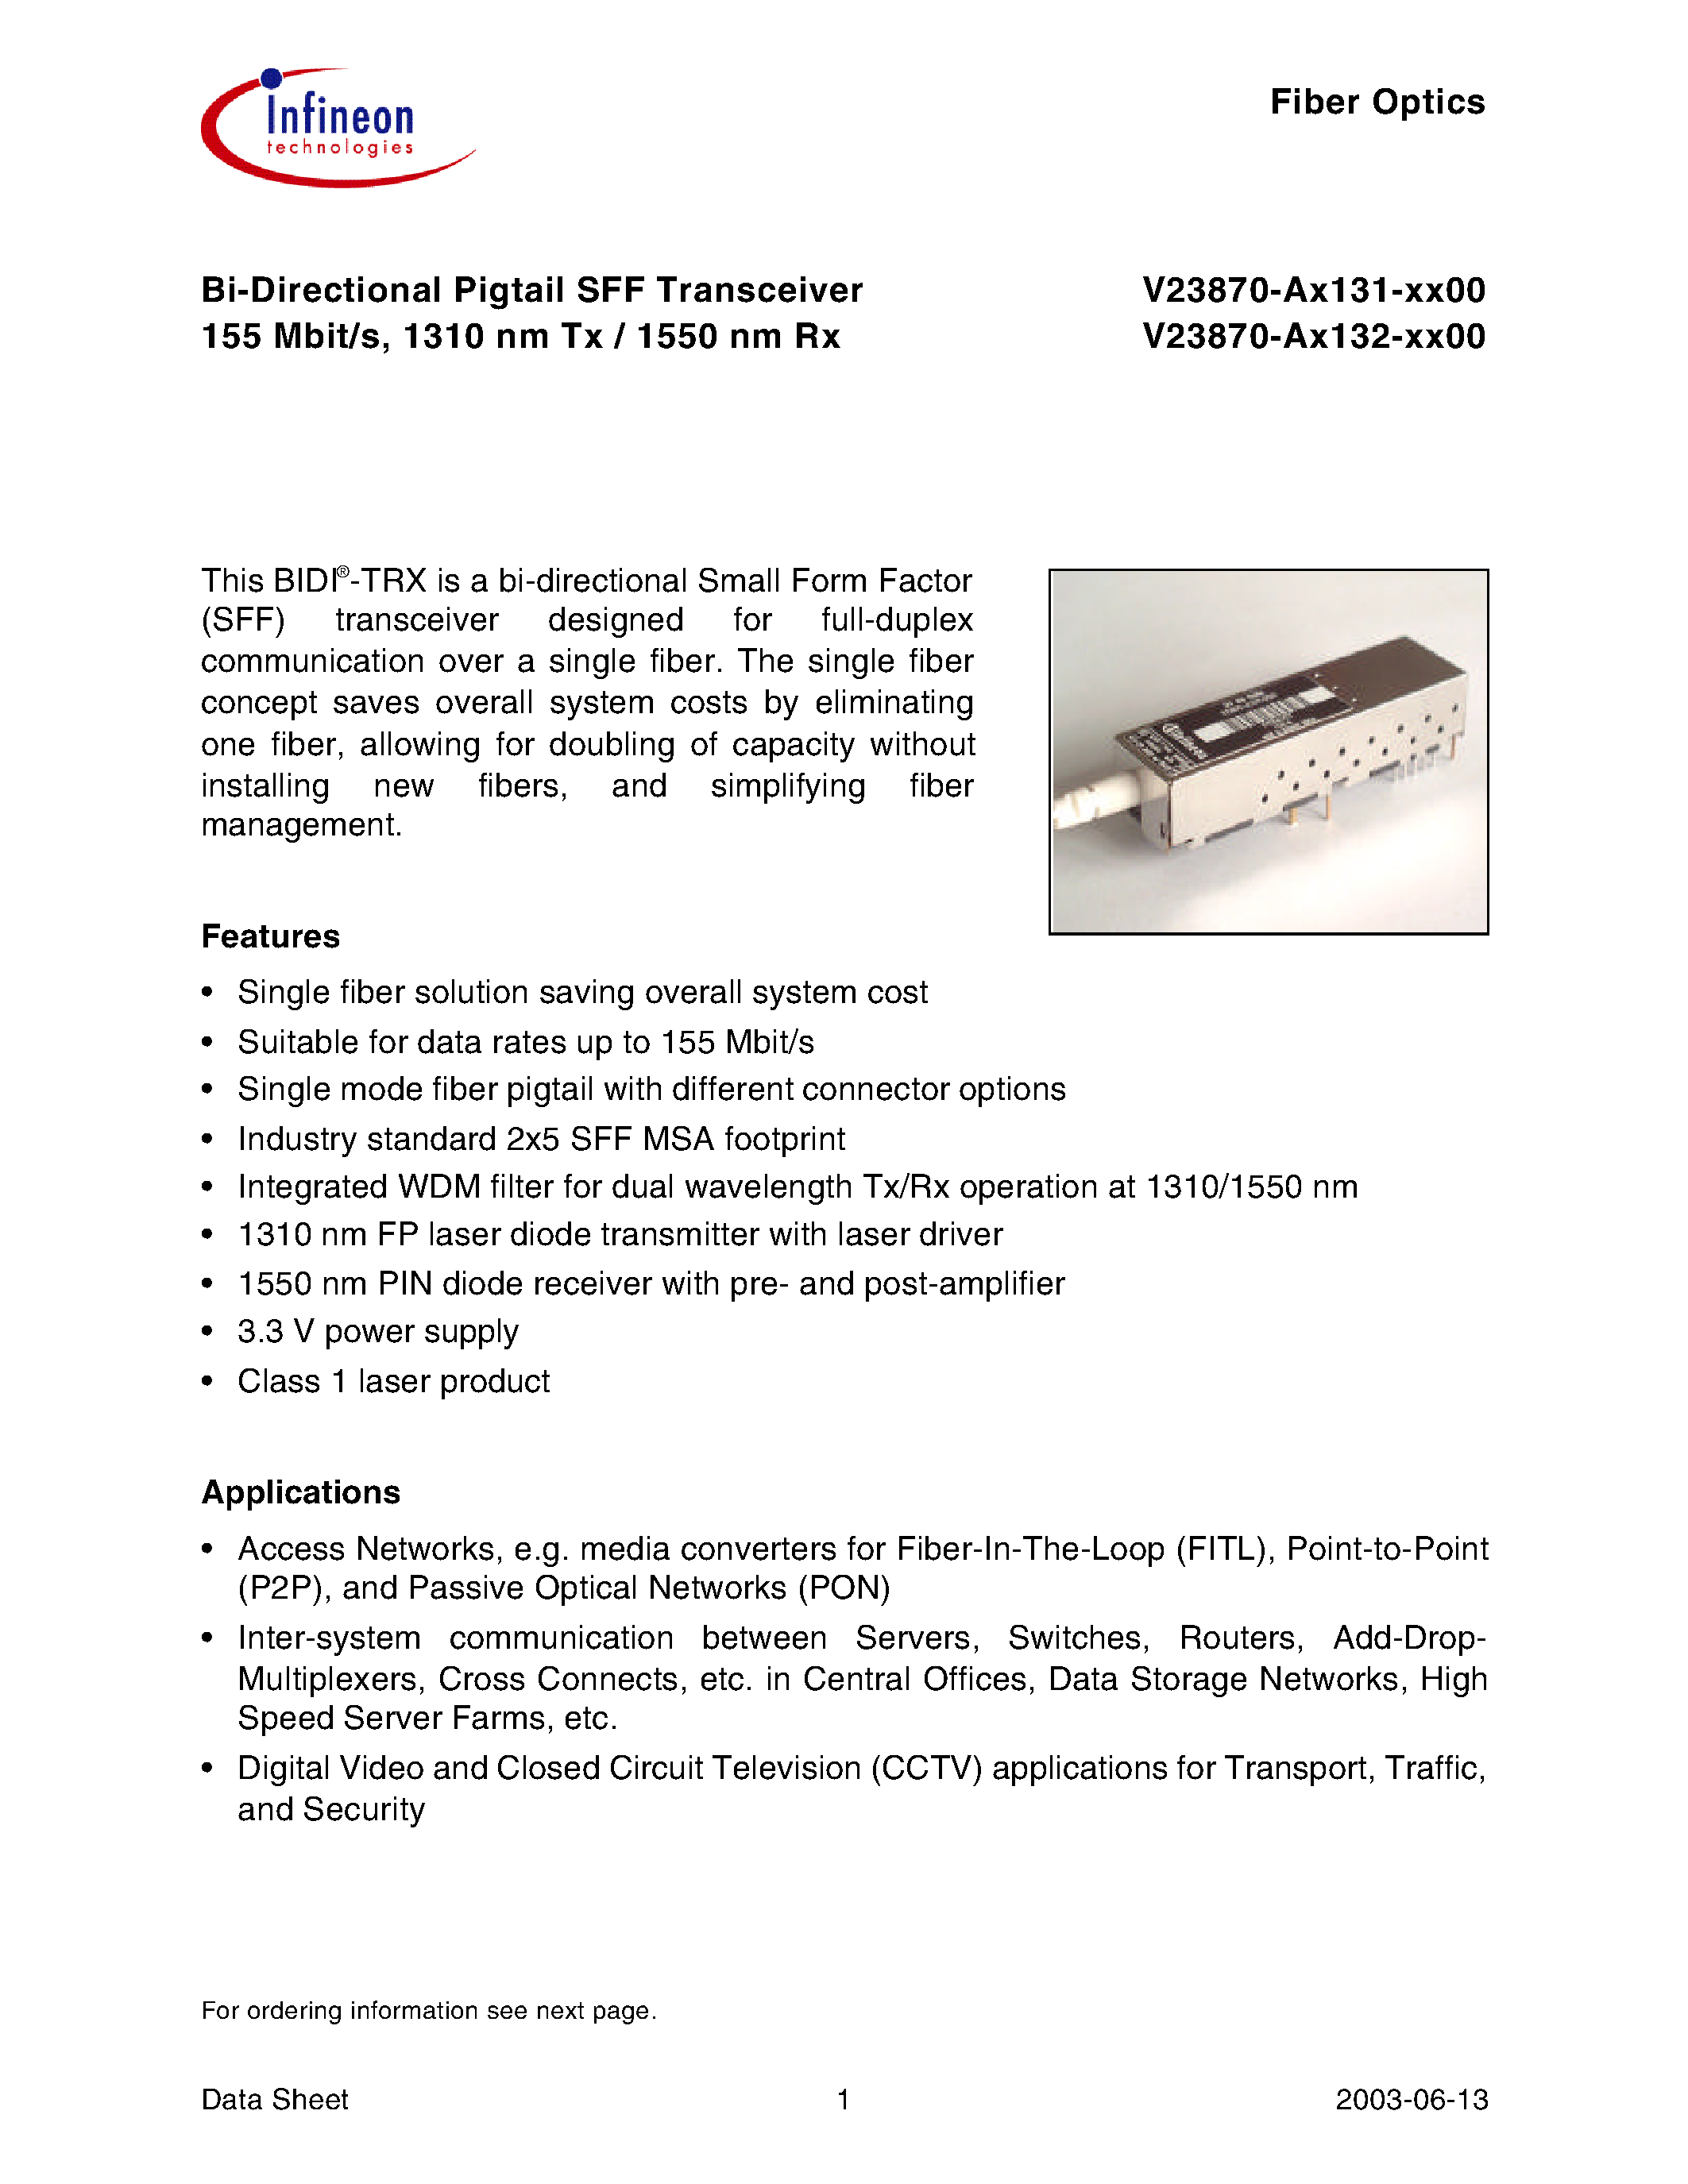 Даташит V23870-A3132-F100 - Bi-Directional Pigtail SFF Transceiver 155 Mbit/s/ 1310 nm Tx / 1550 nm Rx страница 1